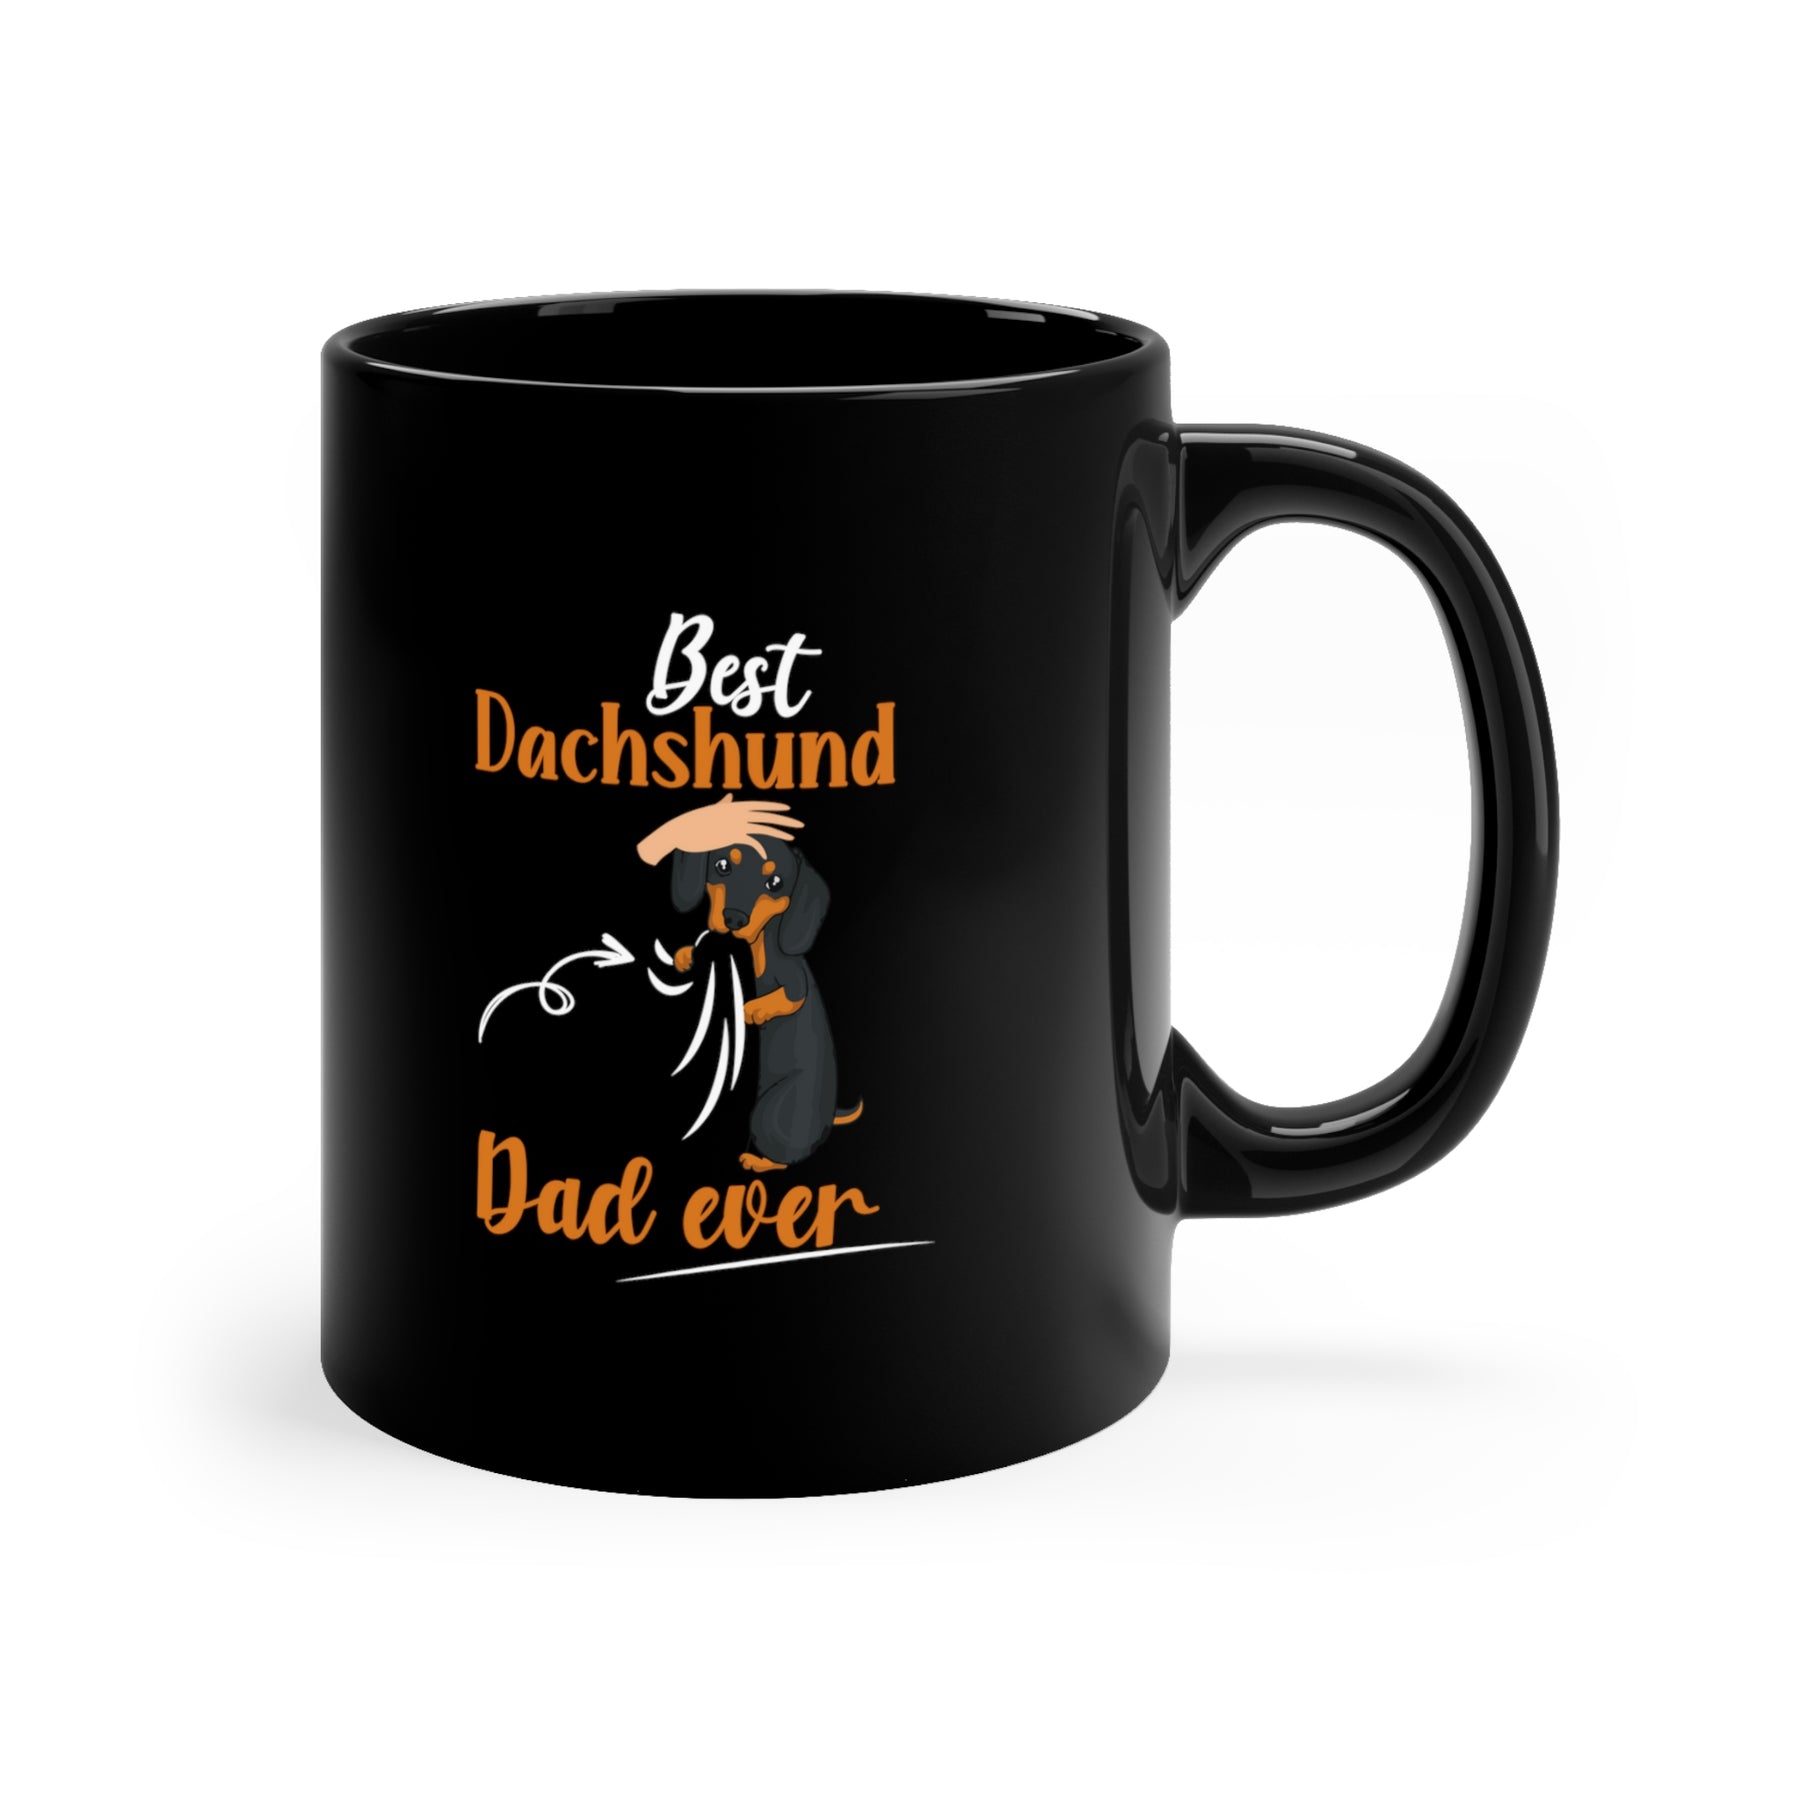 Dachshund Mugs / Dachshund Dog Mugs